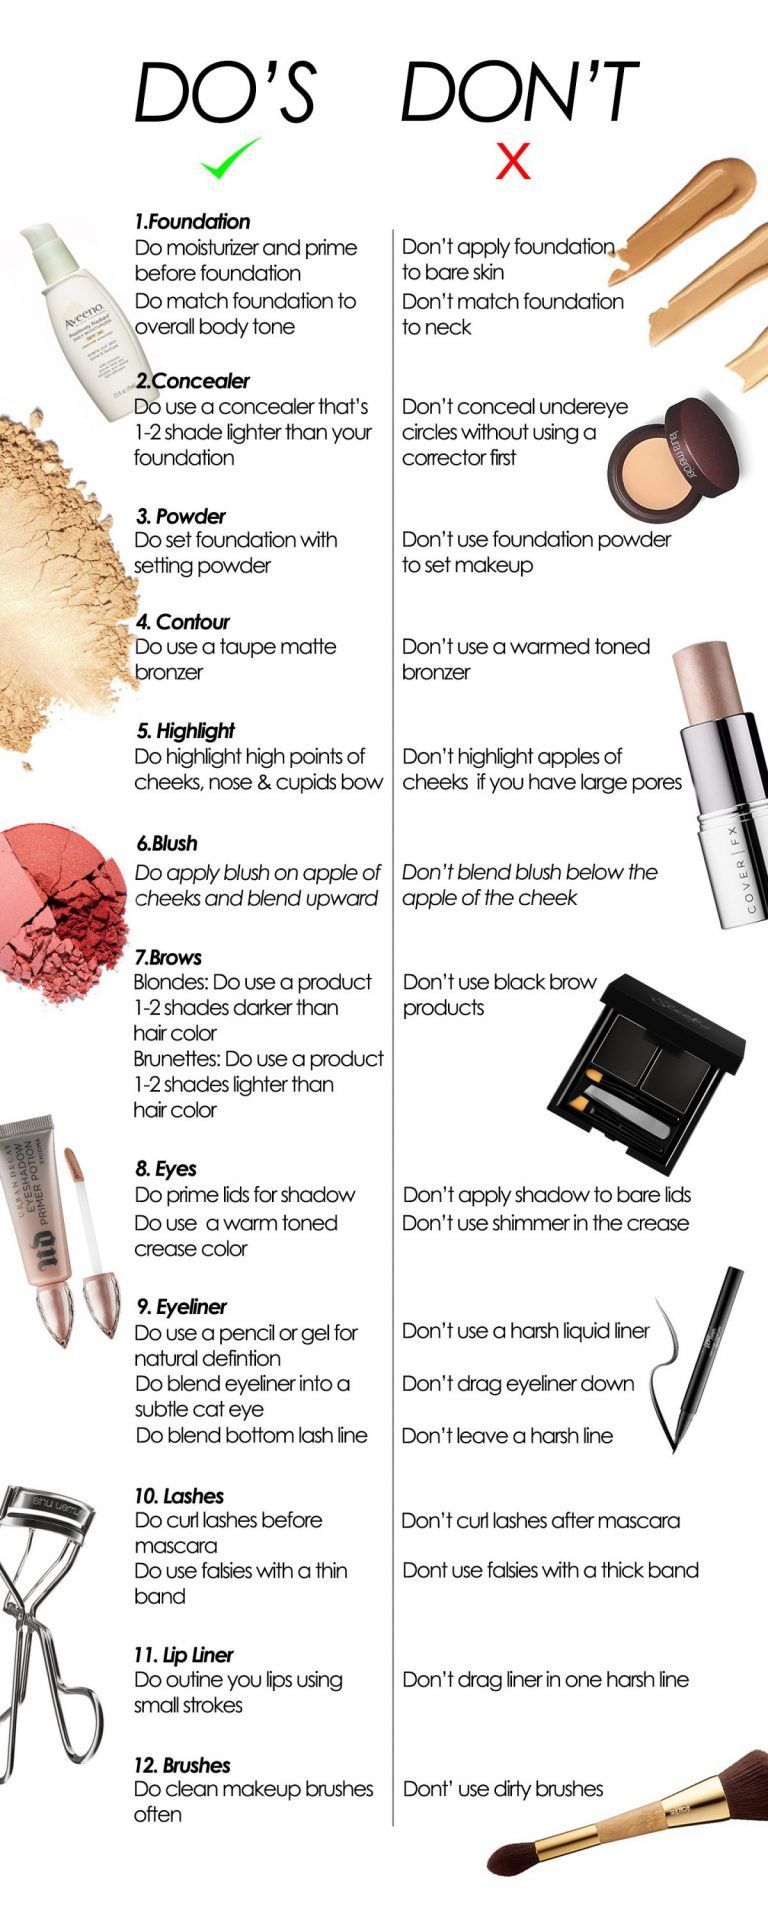 17 hairstyles DIY makeup tips ideas